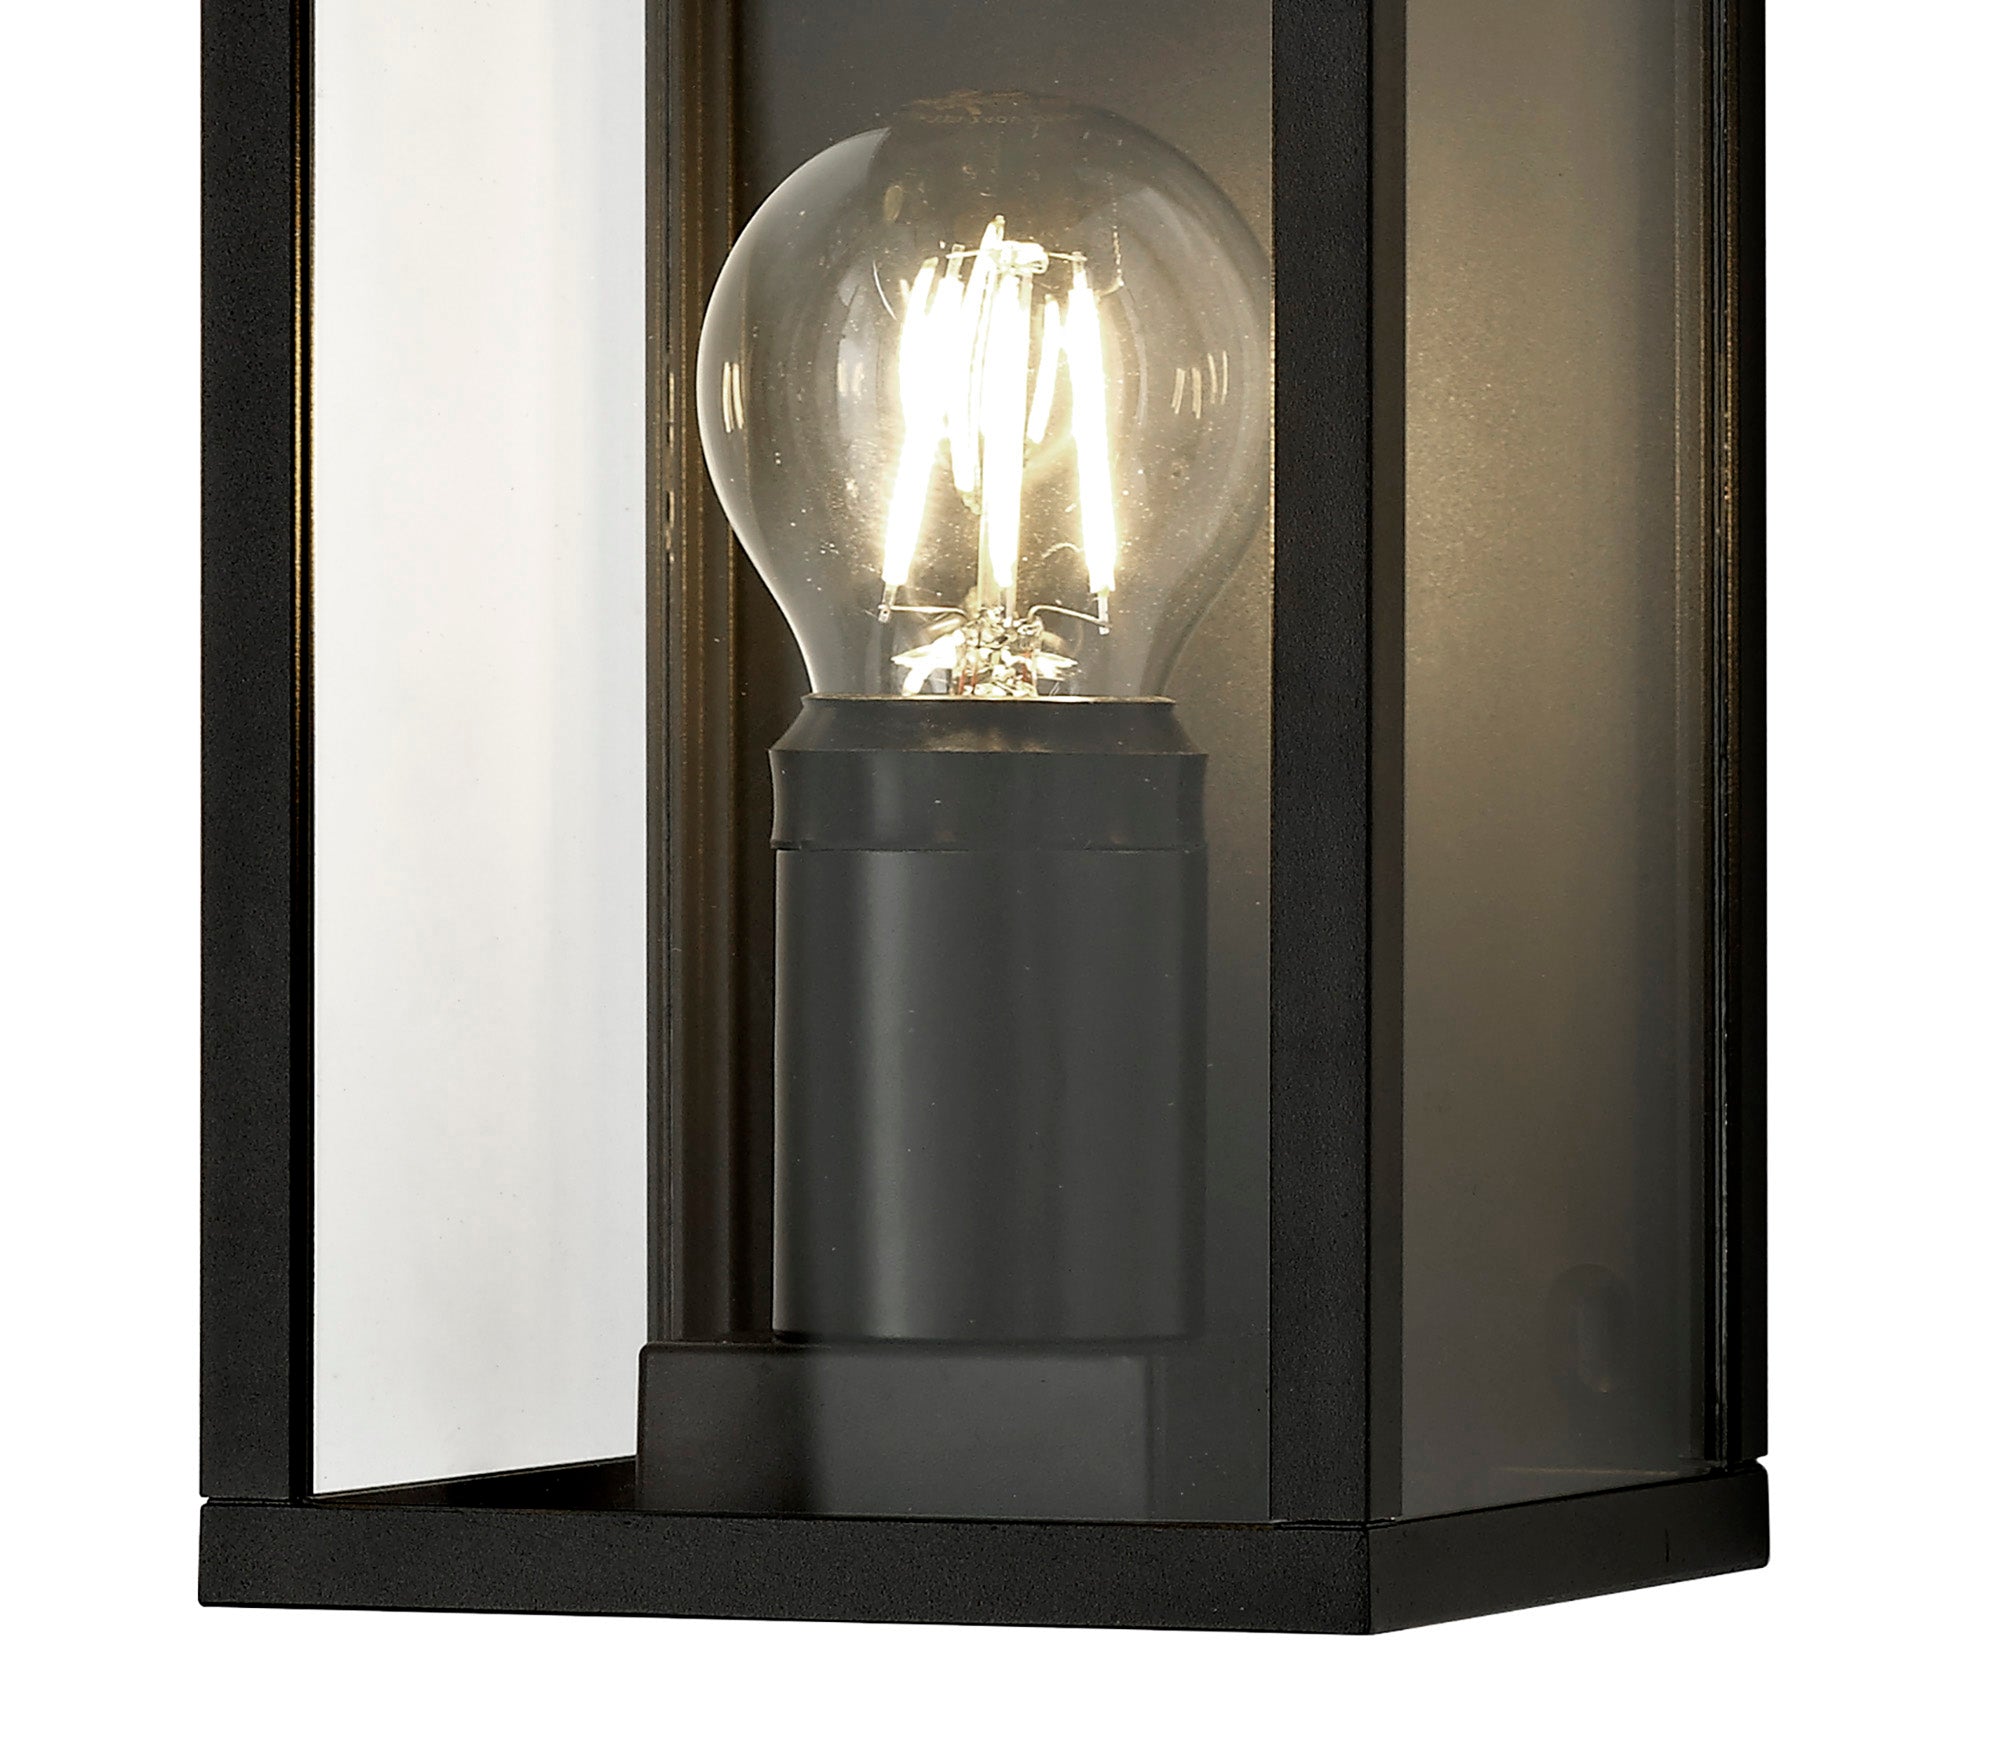 Atam Flush Wall Lamp, 1 x E27, IP54, Graphite Black, 2yrs Warranty